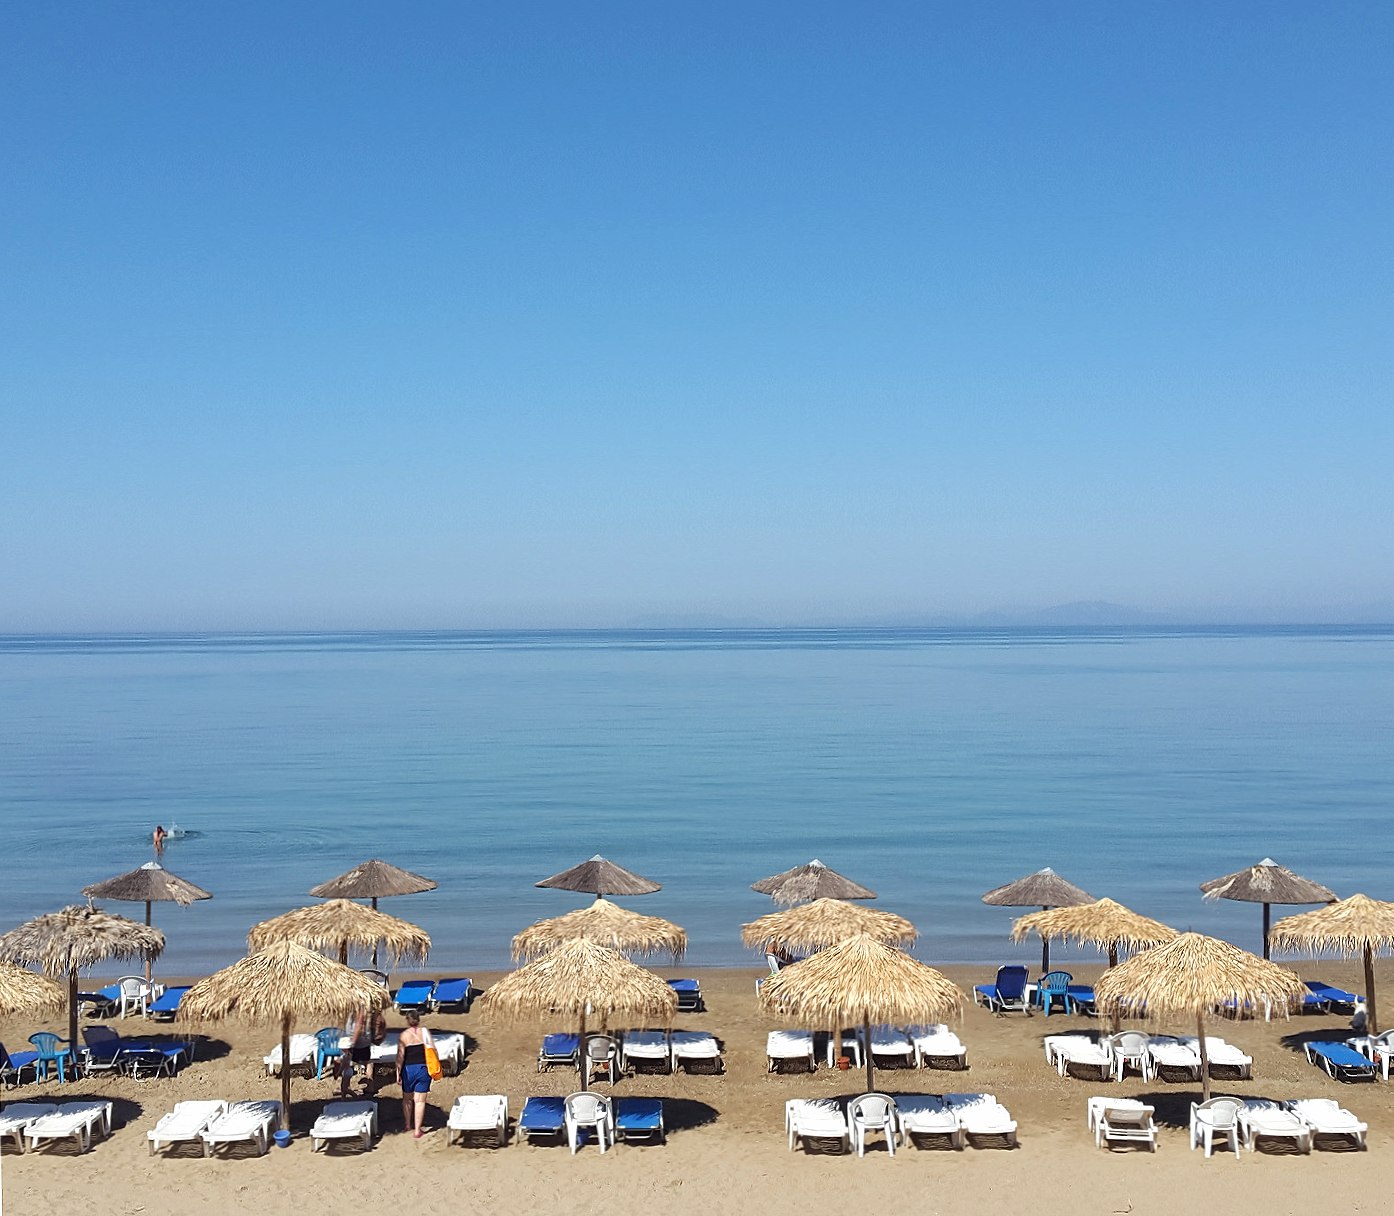 greek beach at 1024 x 1024 iPad size wallpapers HD quality